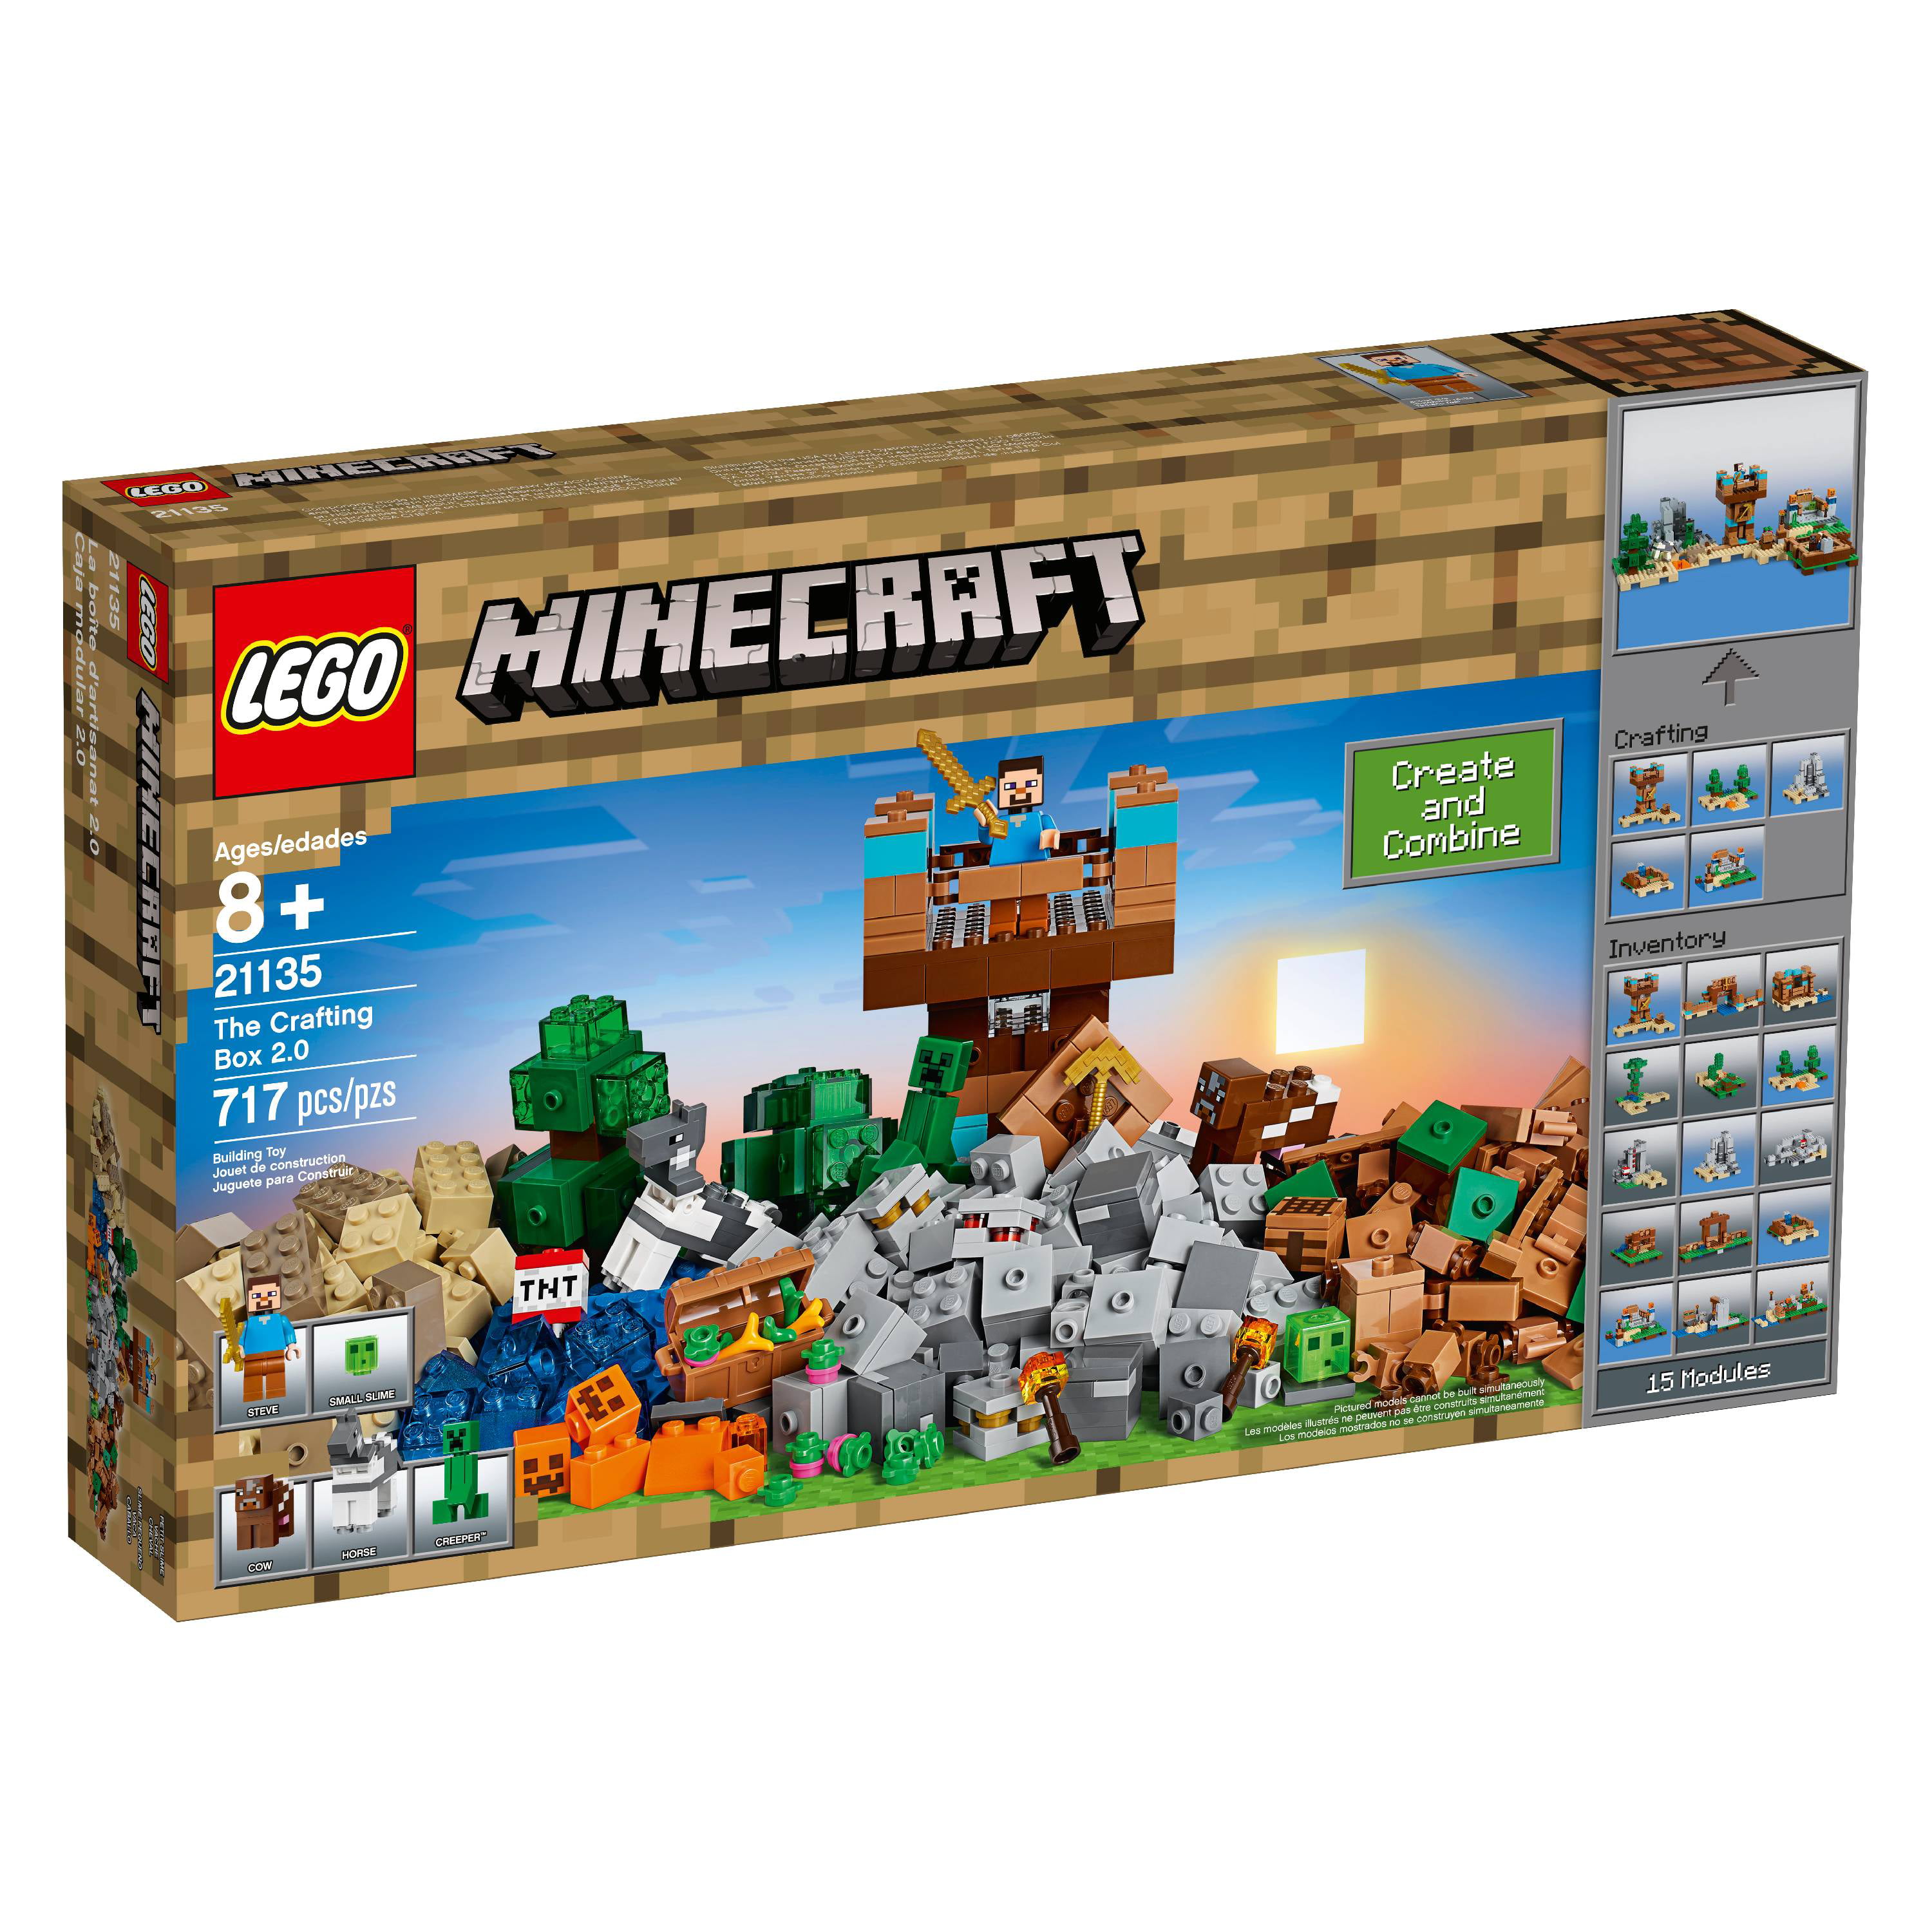 LEGO Minecraft Crafting Box 2.0 21135 Pieces) -